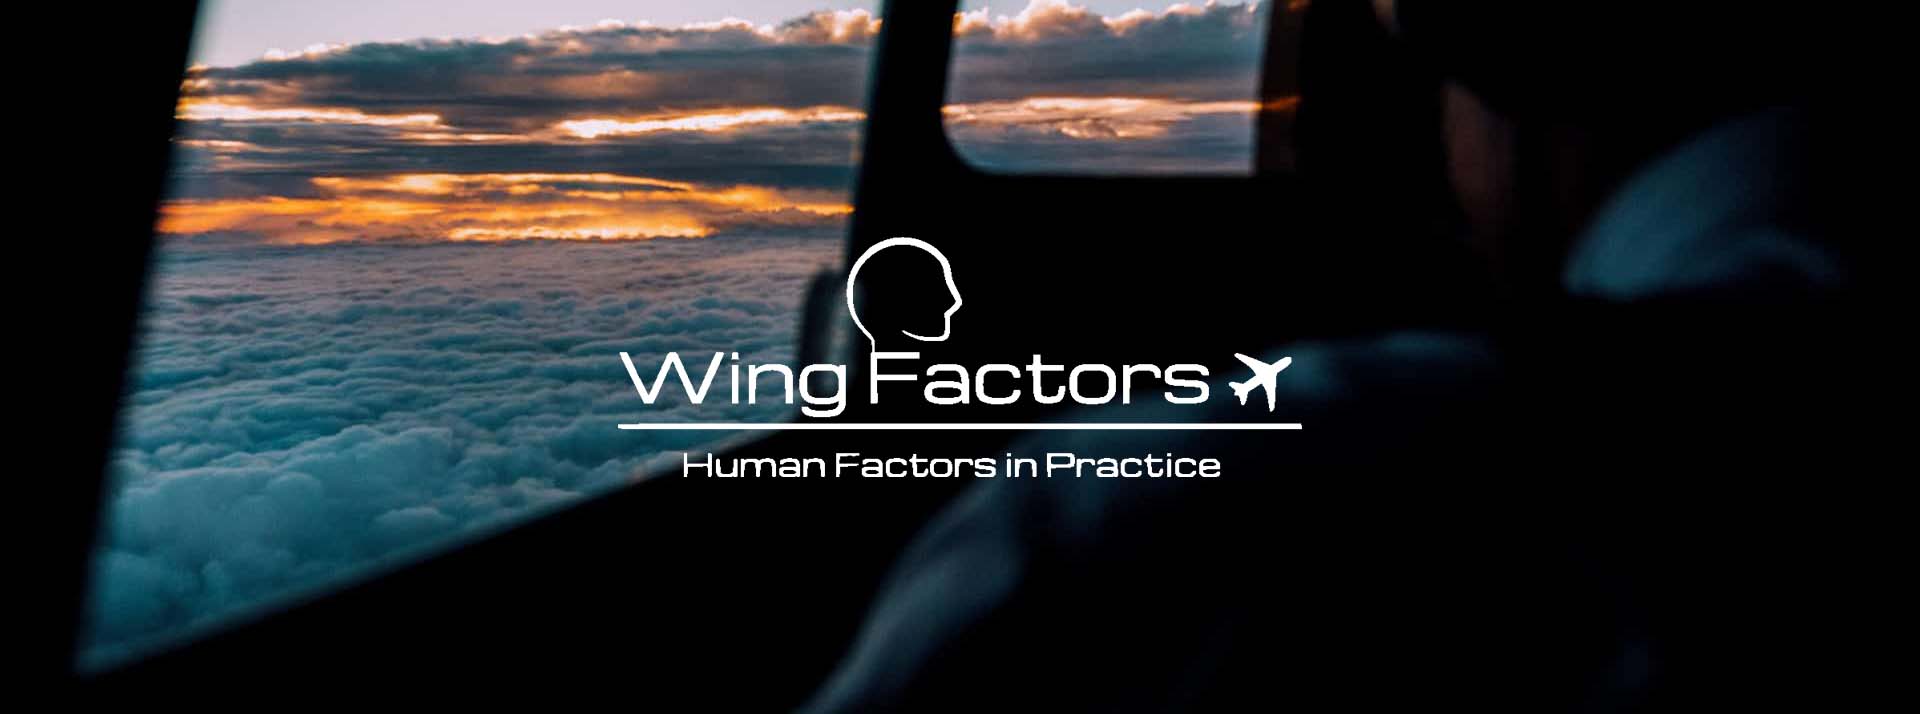 wingfactors pilot window